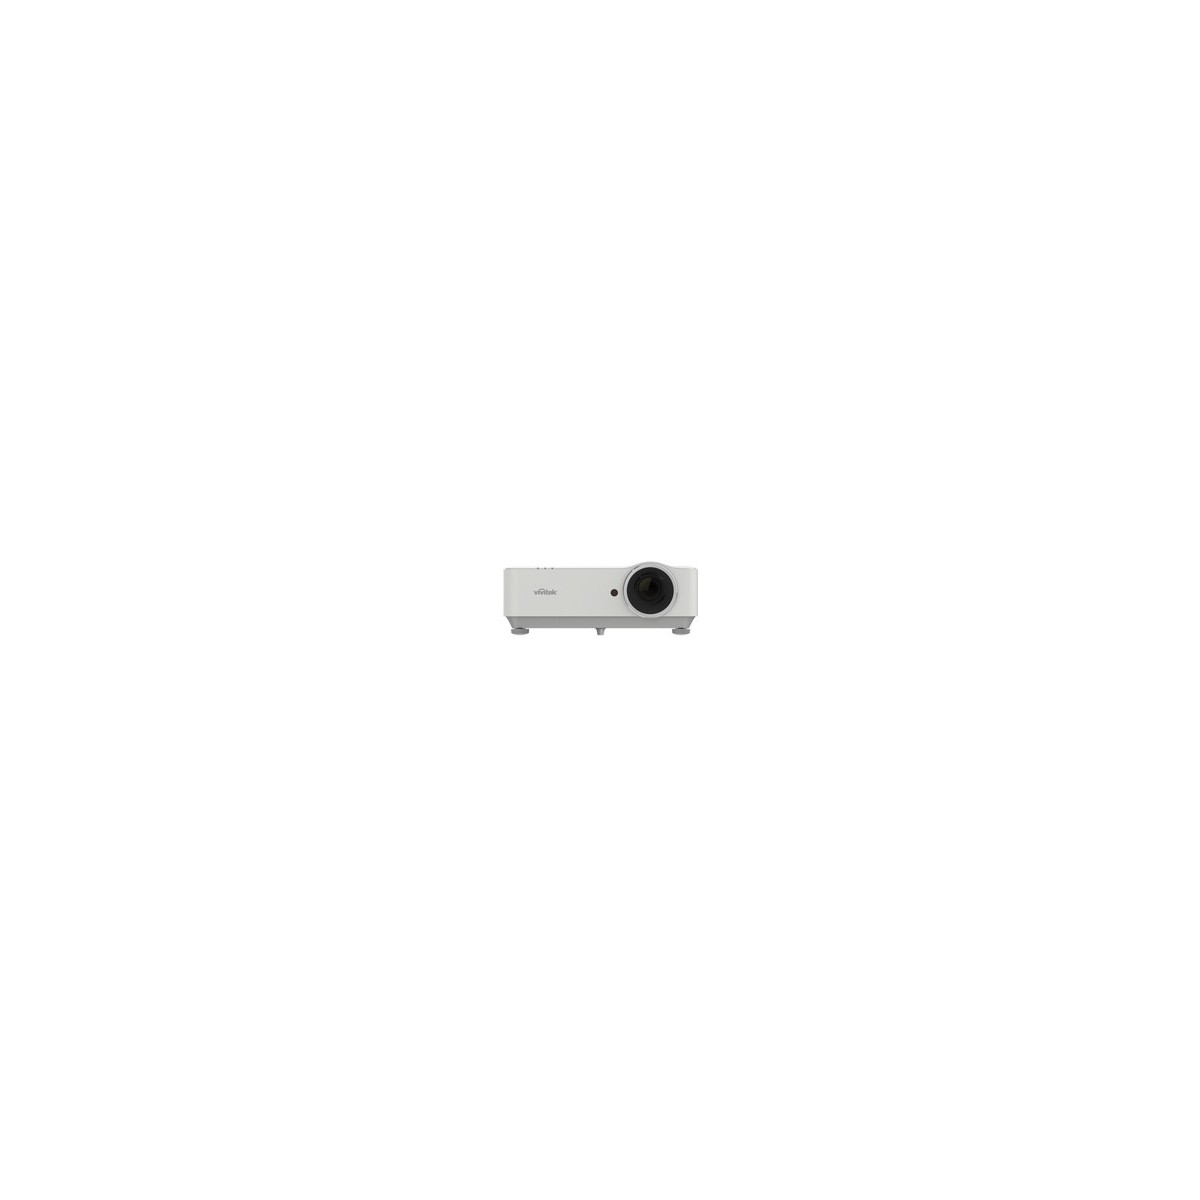 Vivitek DH3660Z - 4500 ANSI lumens - DLP - 1080p (1920x1080) - 20000:1 - 16:9 - 660.4 - 8229.6 mm (26 - 324)